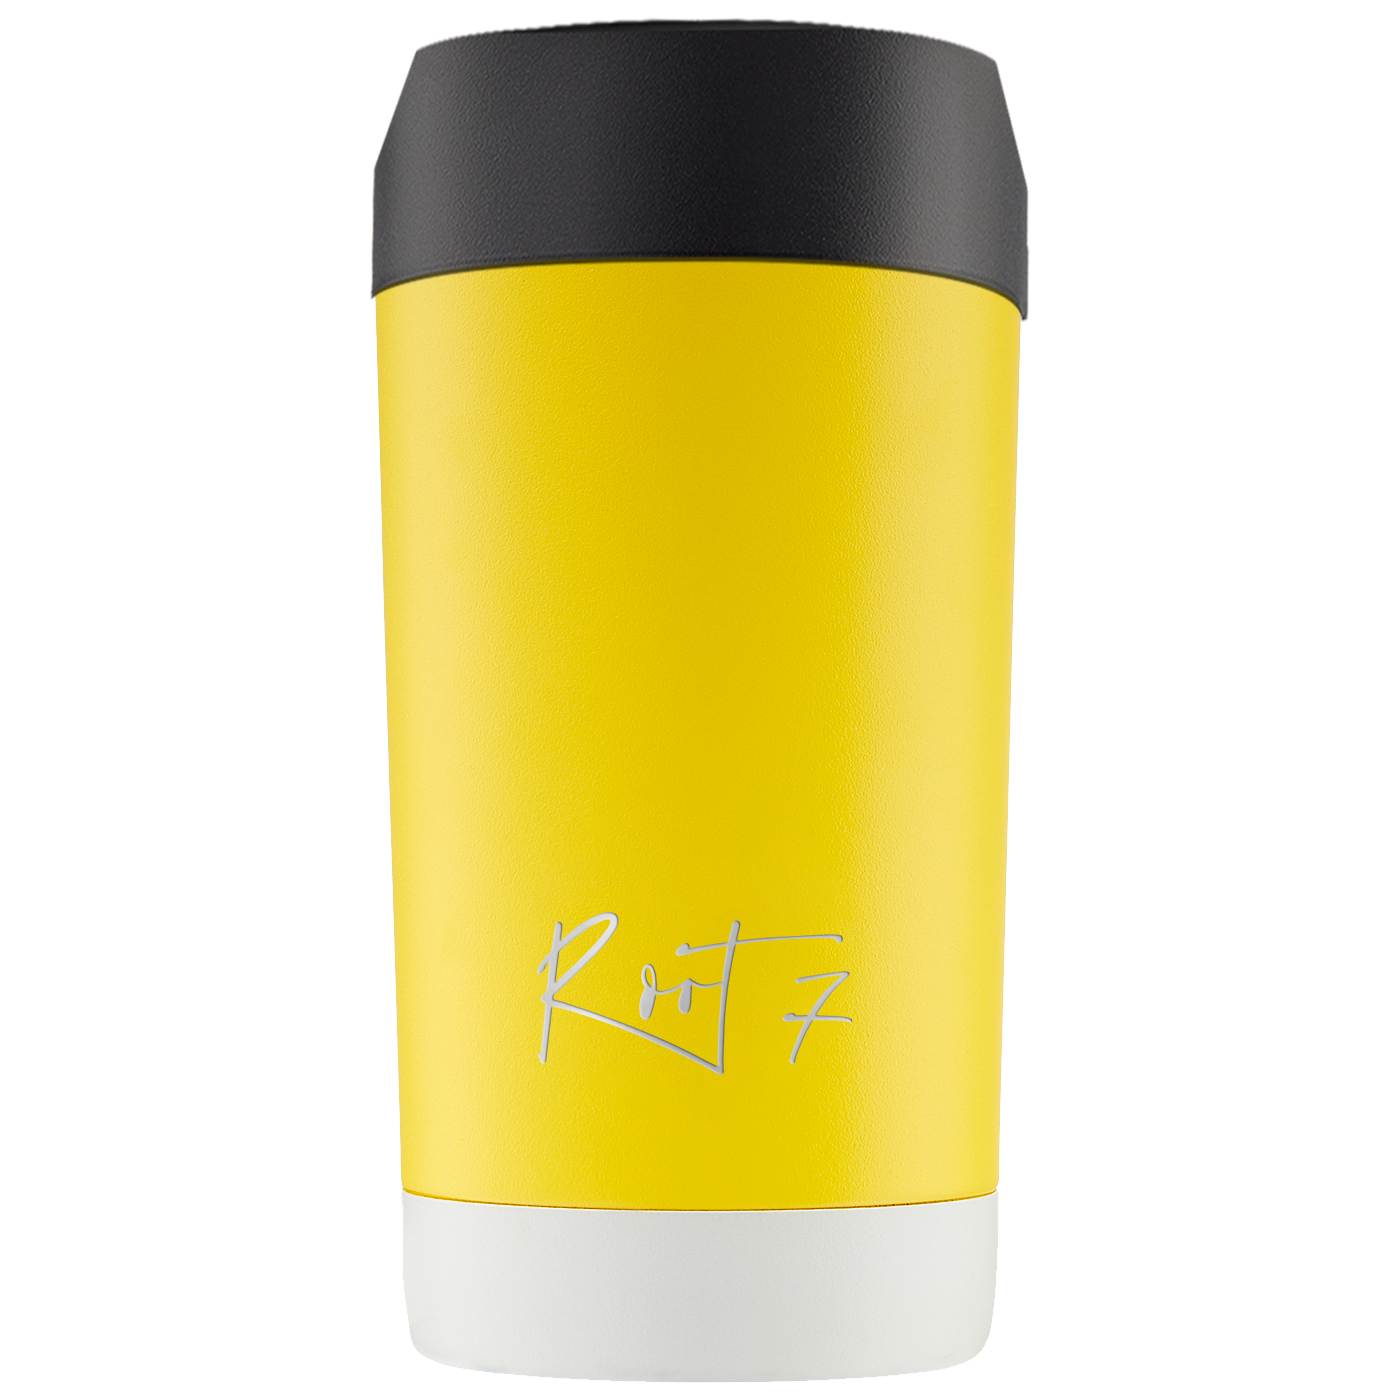 Yellow Travel Mug